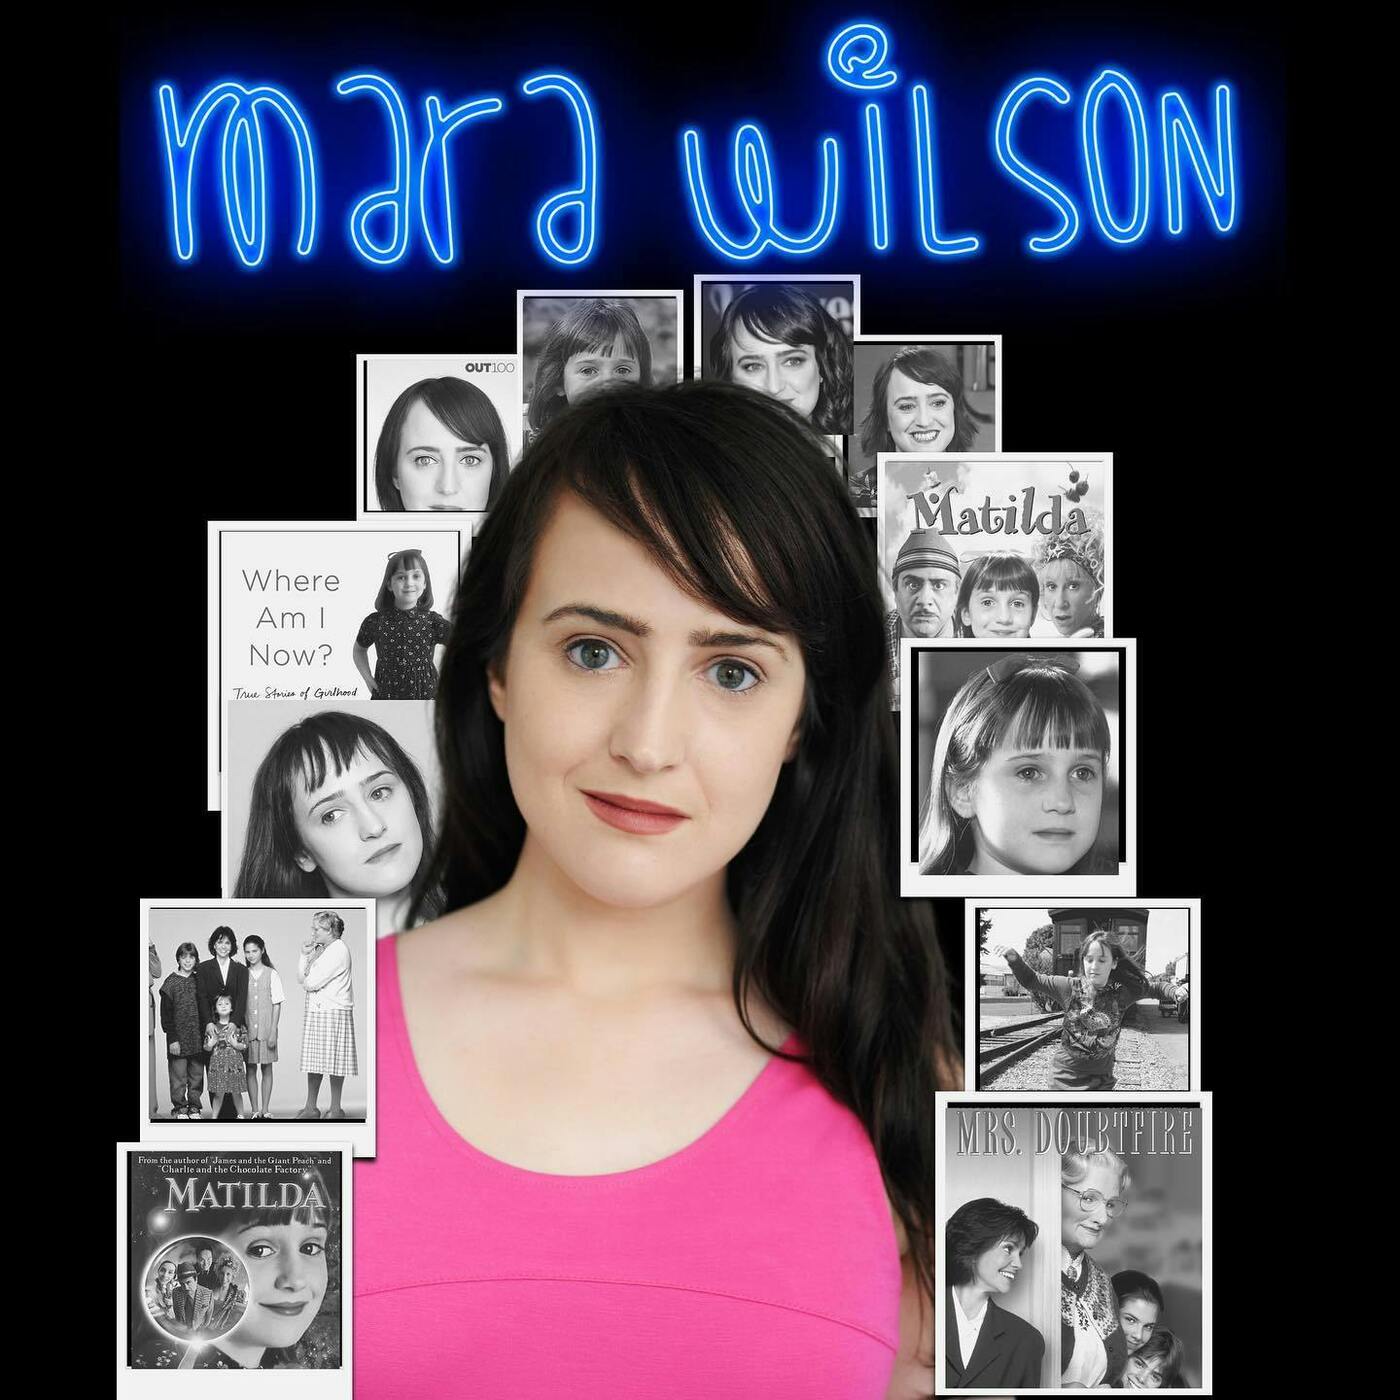 Vulnerable EP64: Former Child Star Mara Wilson on Breaking Free of Her Good Girl Past